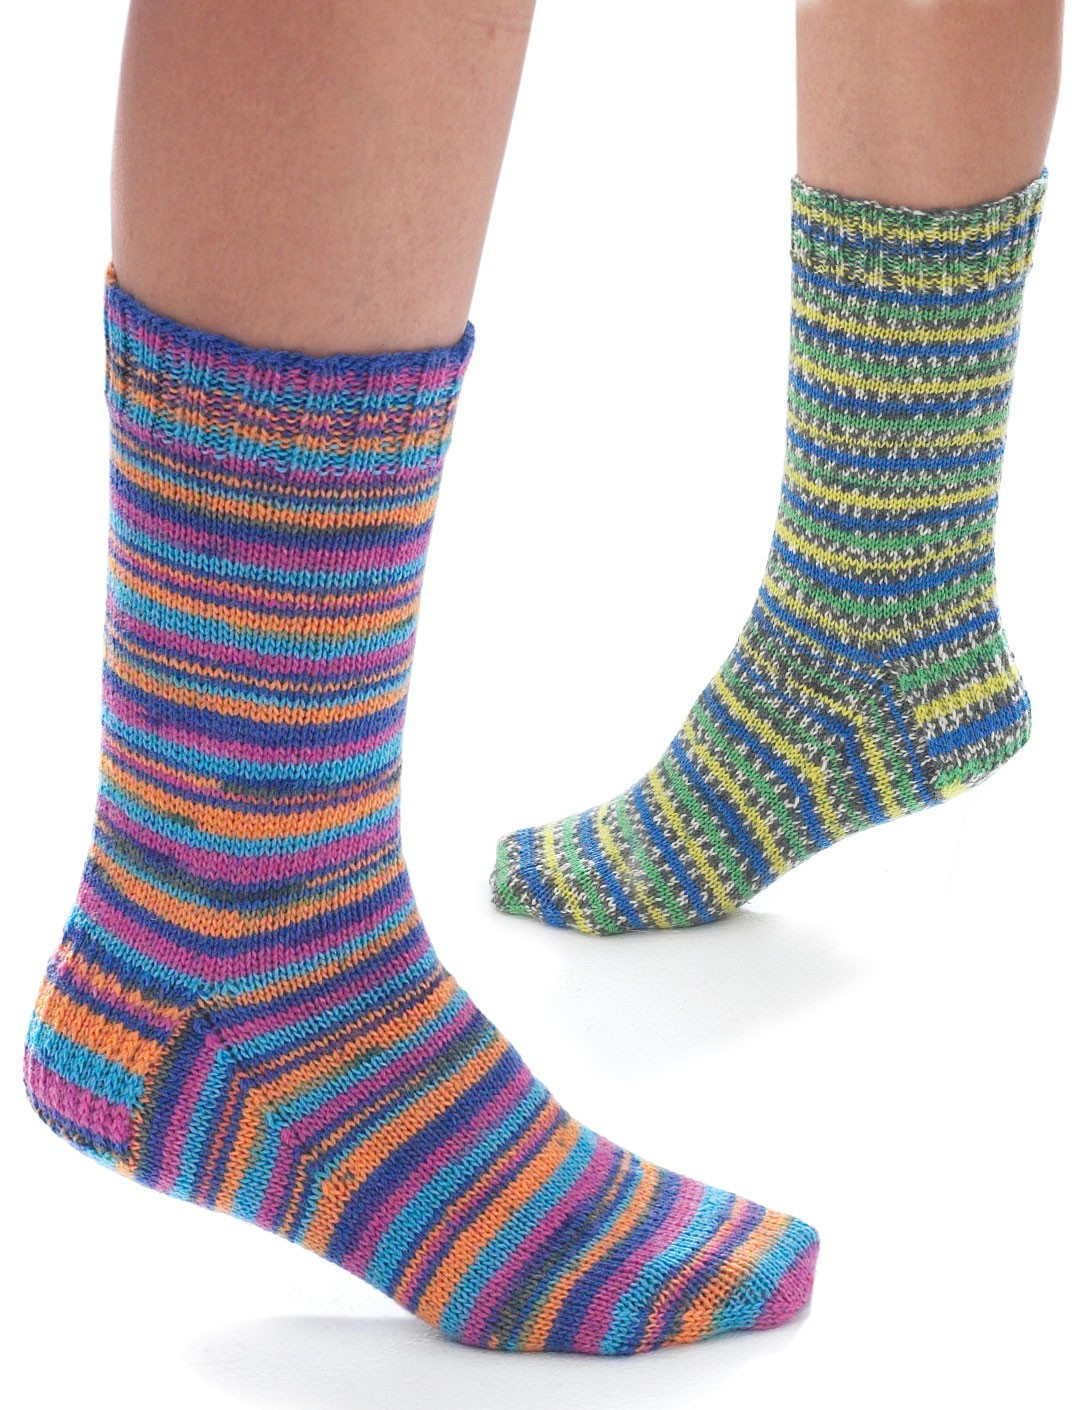 Easy Crochet Sock Pattern Free Knitting Pattern For Kroy Socks Ipaa For